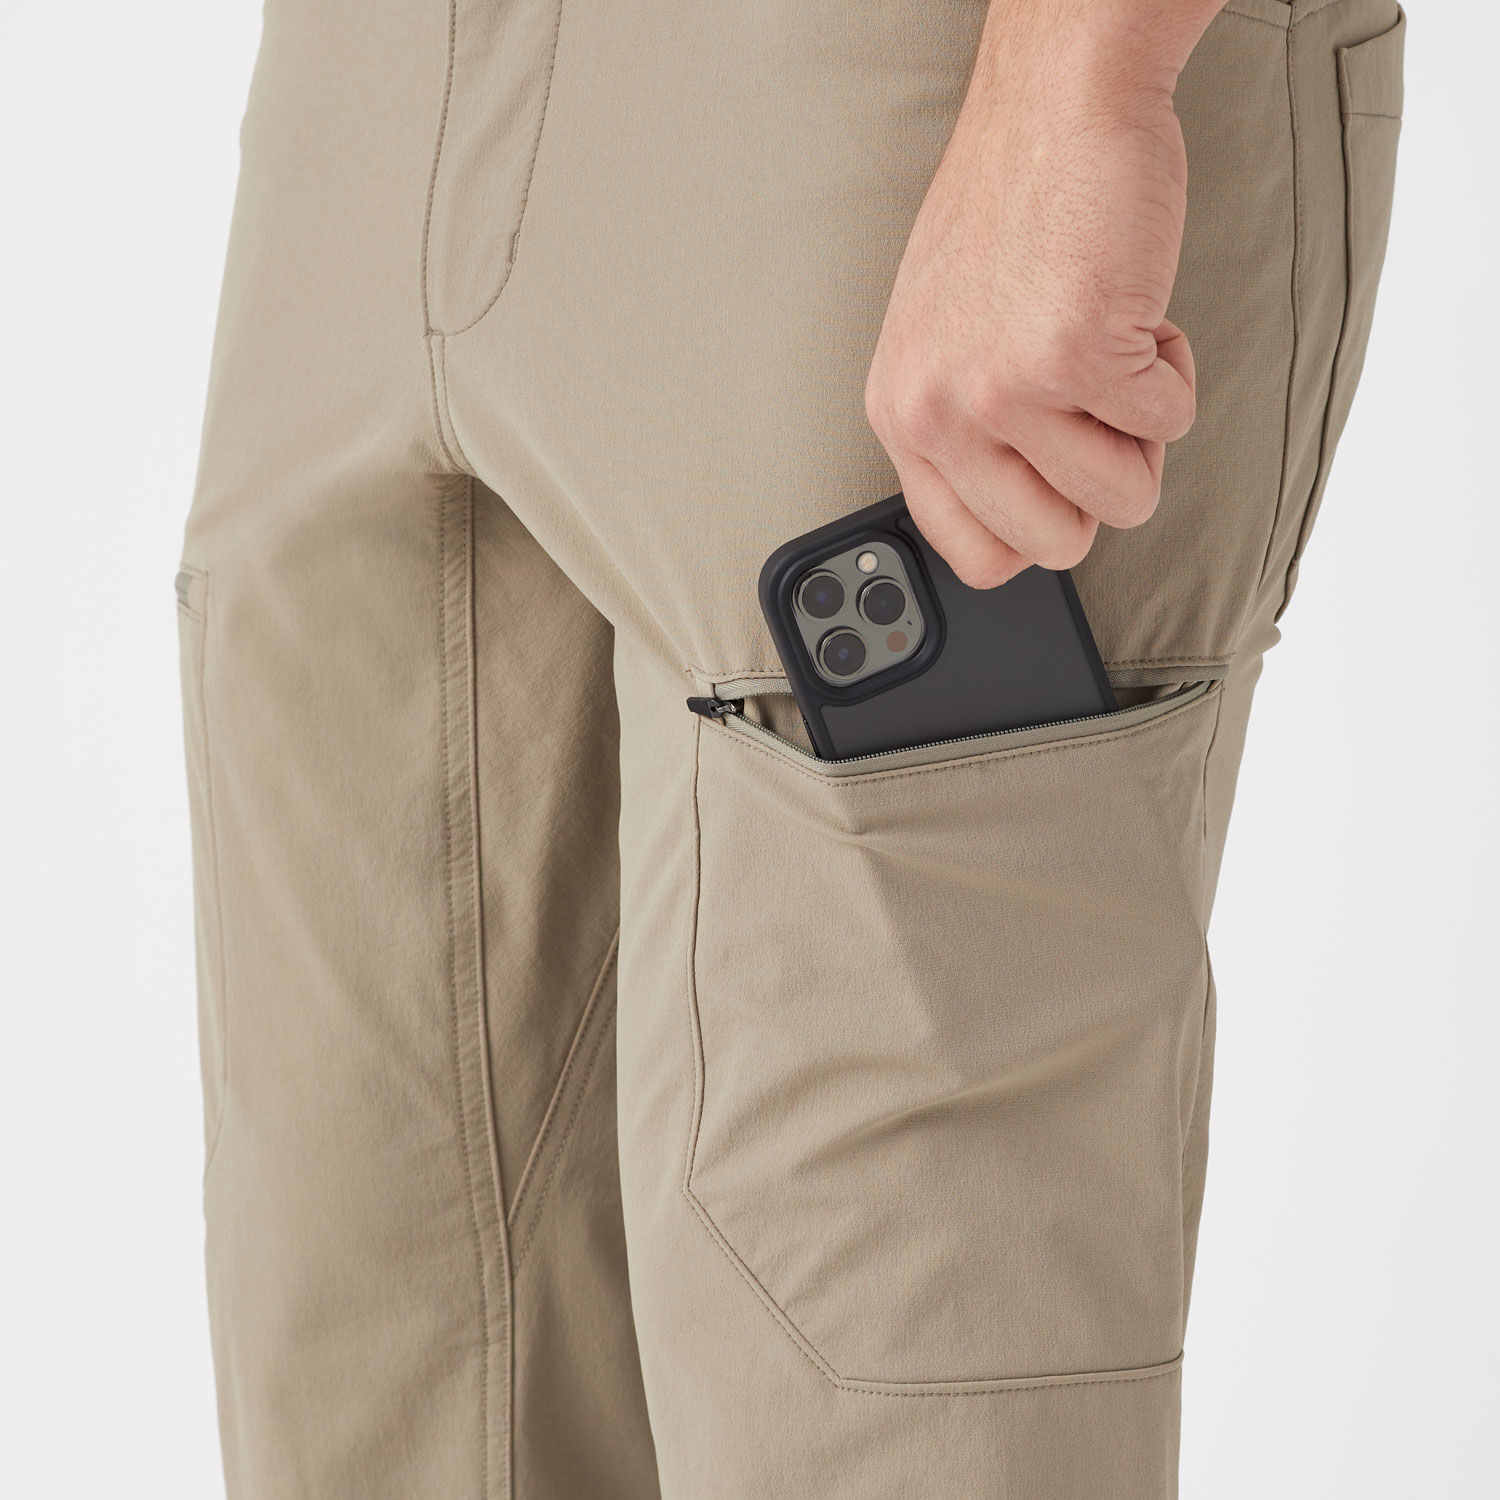 TIP-TOUN Boy's Premium Cotton Army Relaxed Fit Zipper Slim fit Cargo 6  Pocket Jogger Jeans Pants